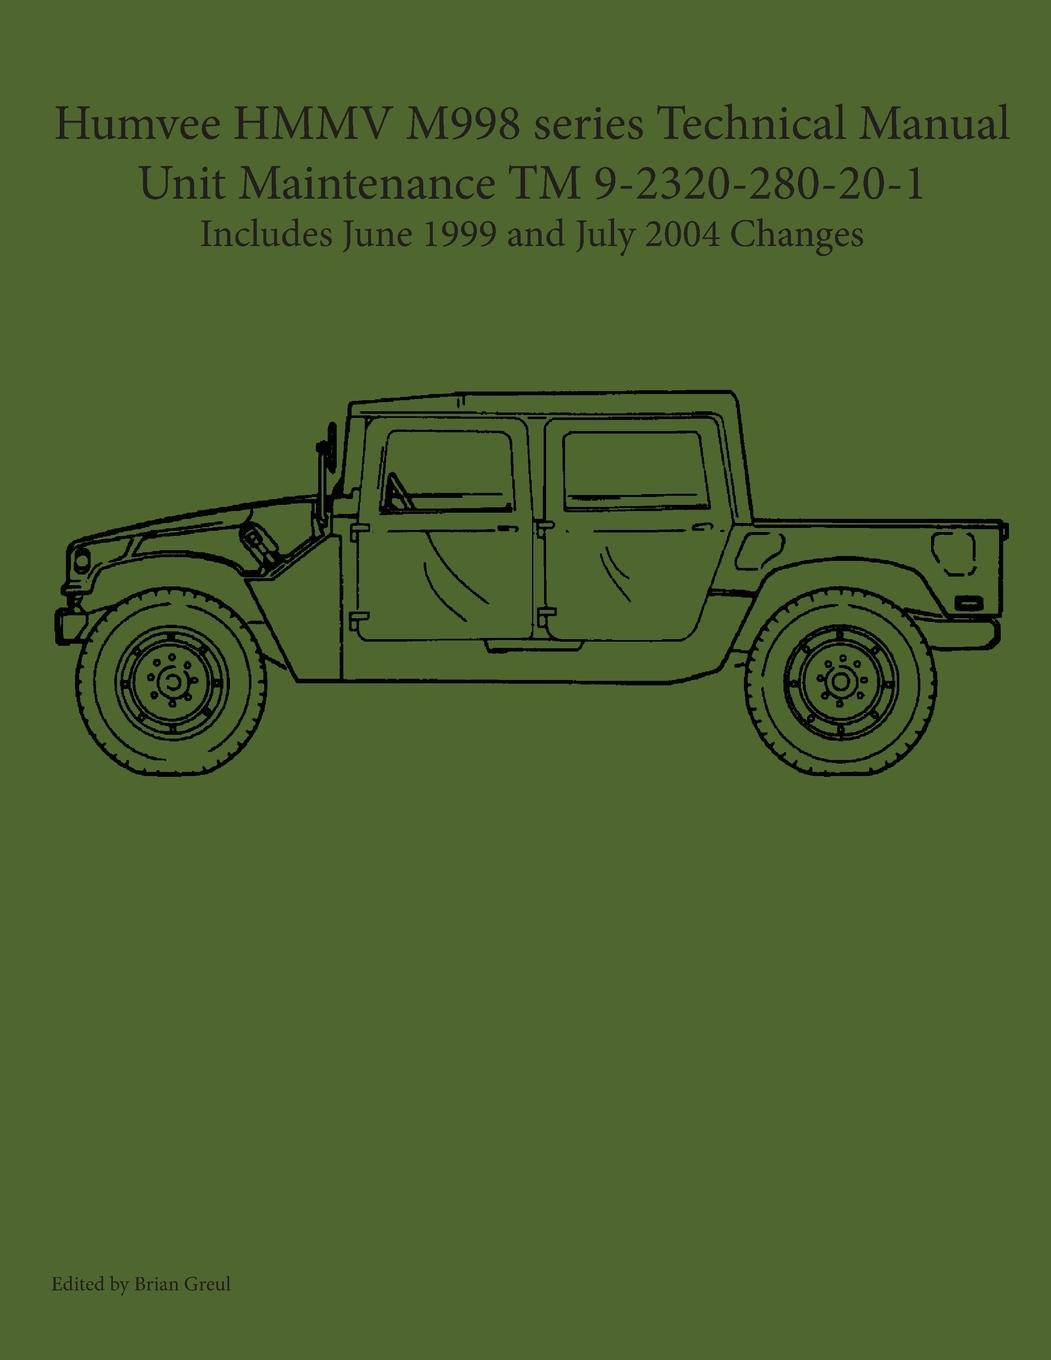 Book Humvee HMMV M998 series Technical Manual Unit Maintenance TM 9-2320-280-20-1 